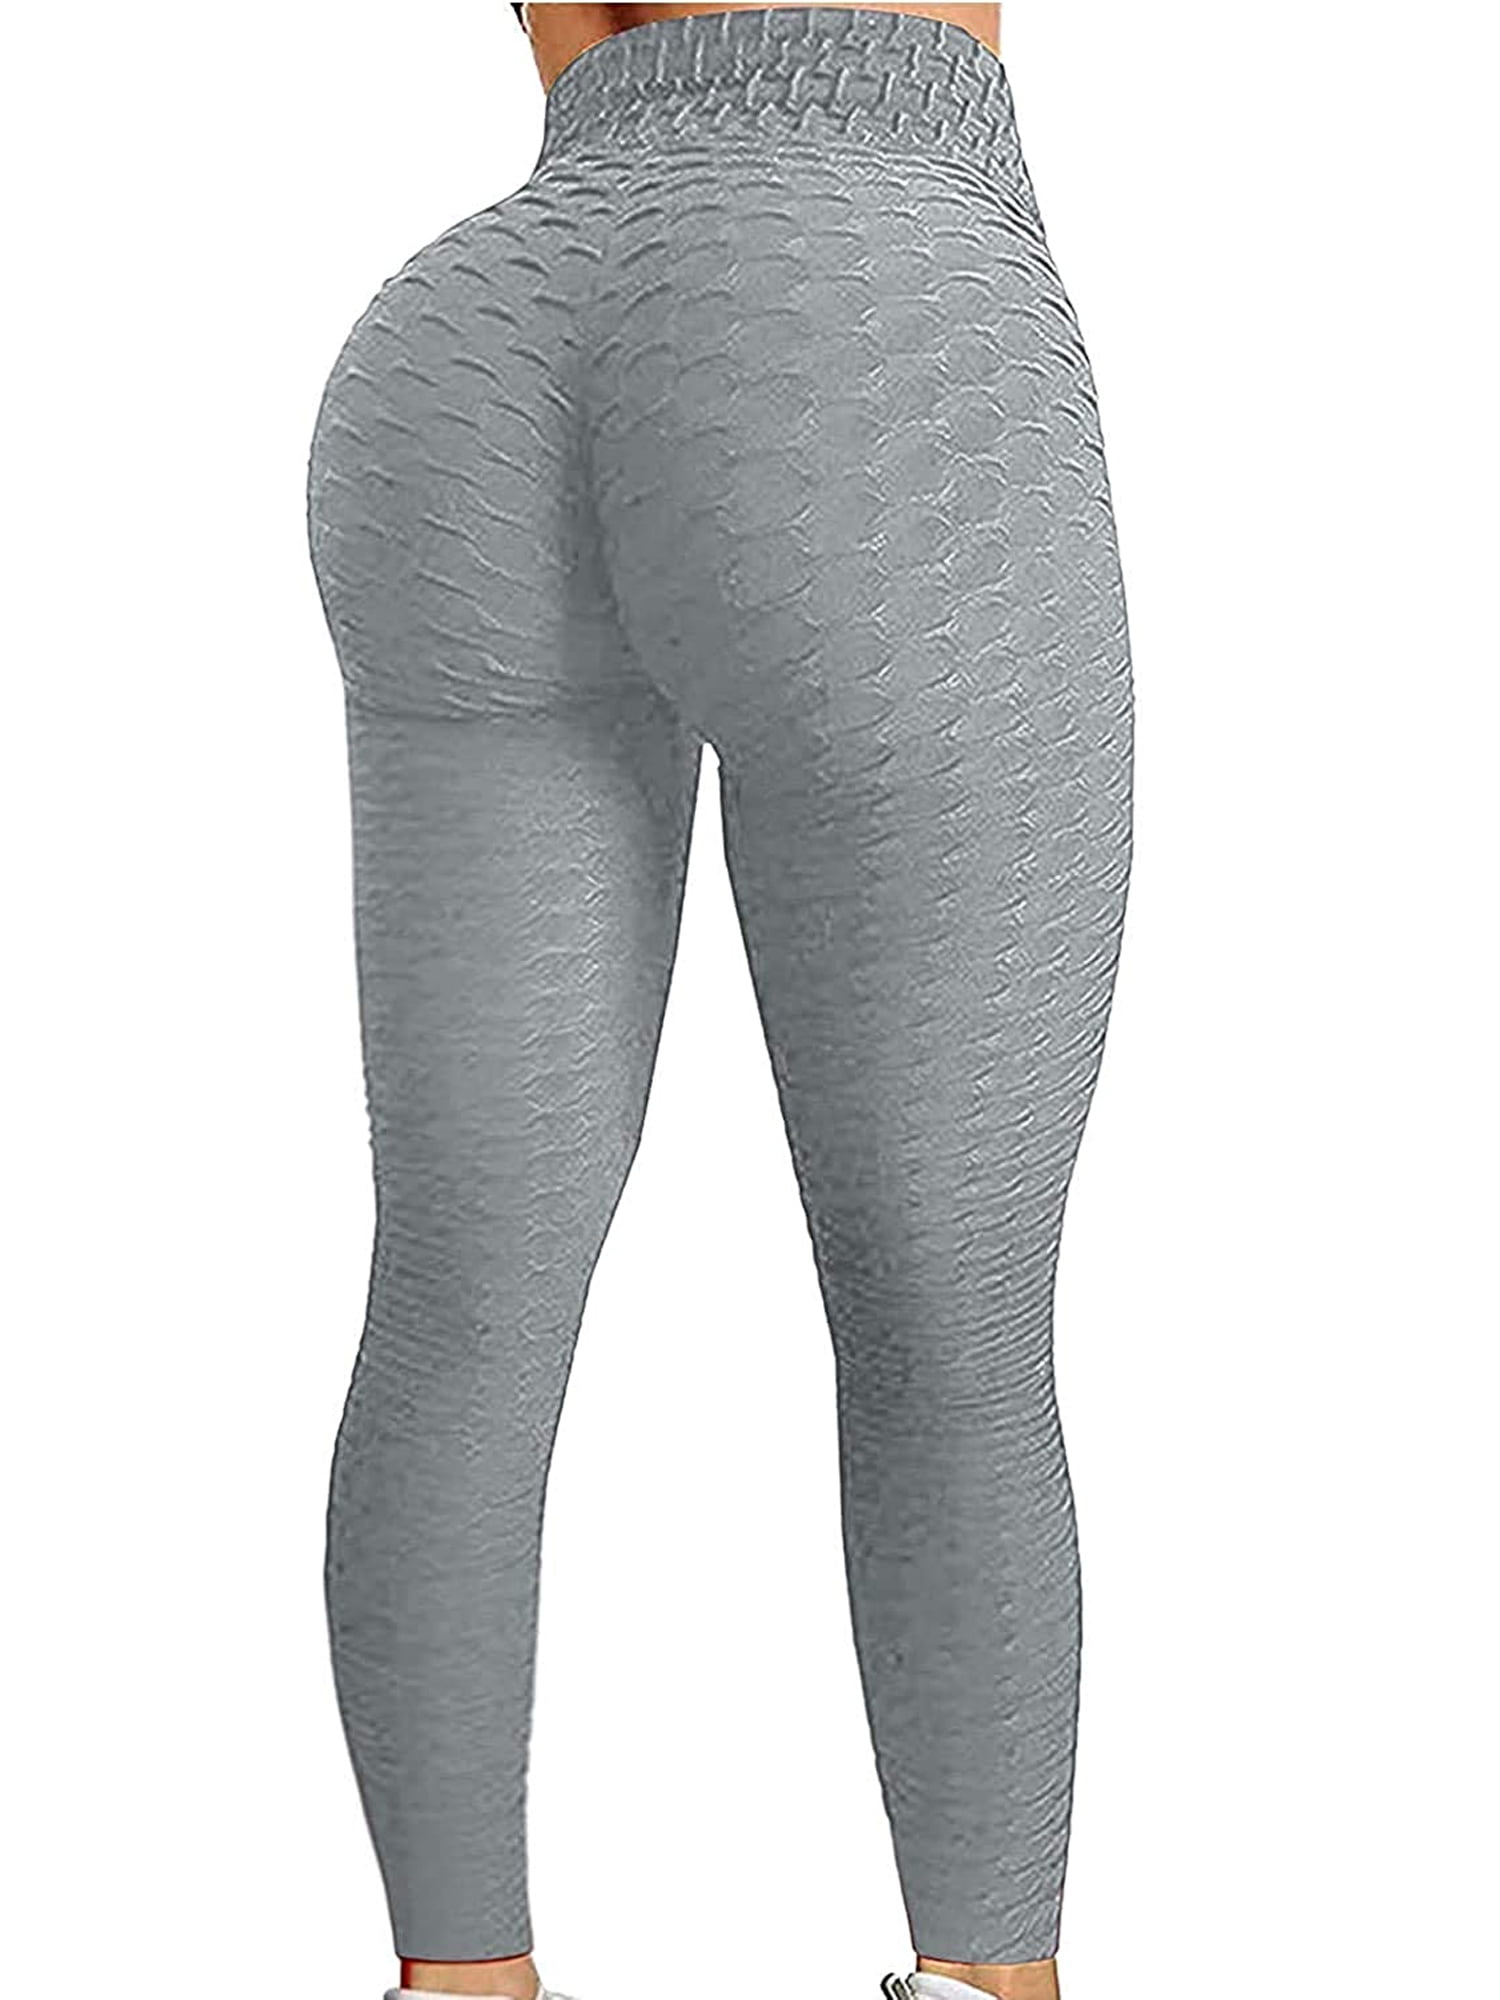 Women Yoga Gym Anti-Cellulite Leggings Fitness Solid Butt Lift Elastic Pants N8 